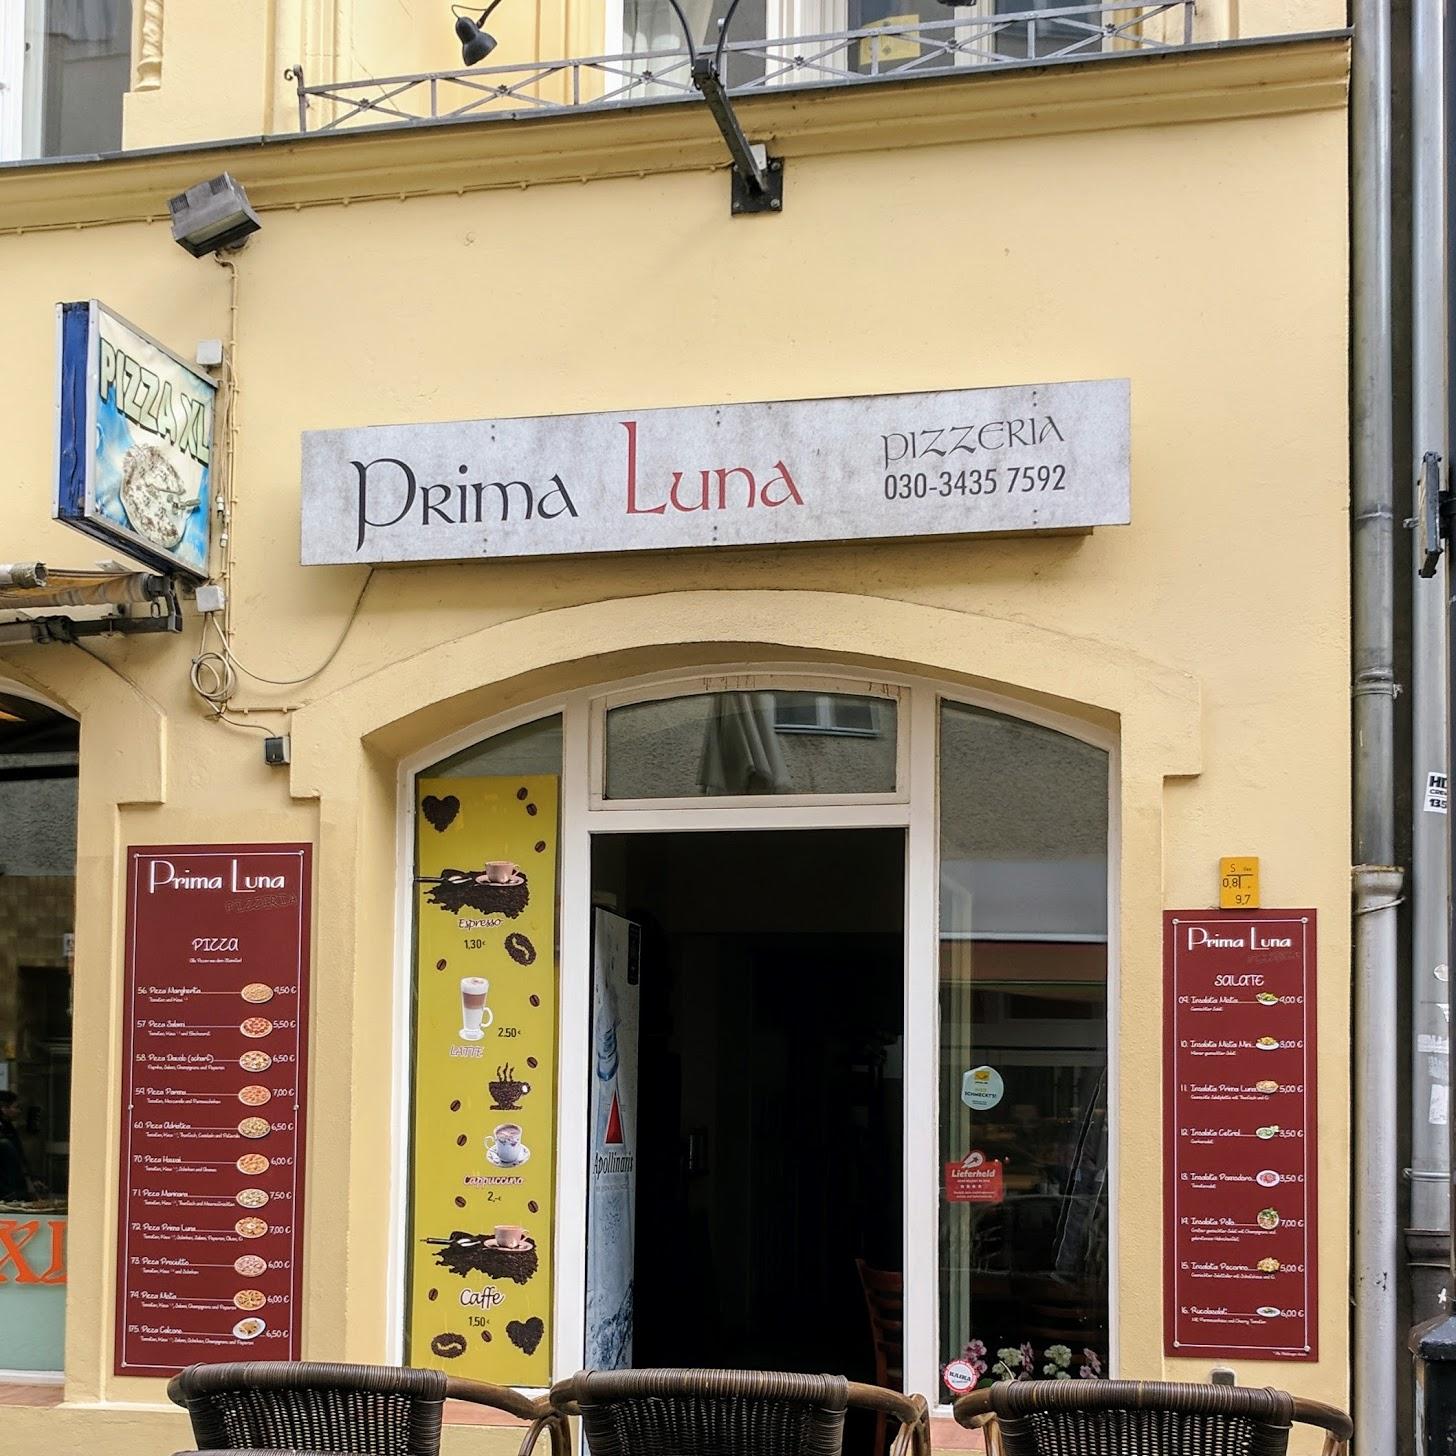 Restaurant "Prima Luna" in Berlin